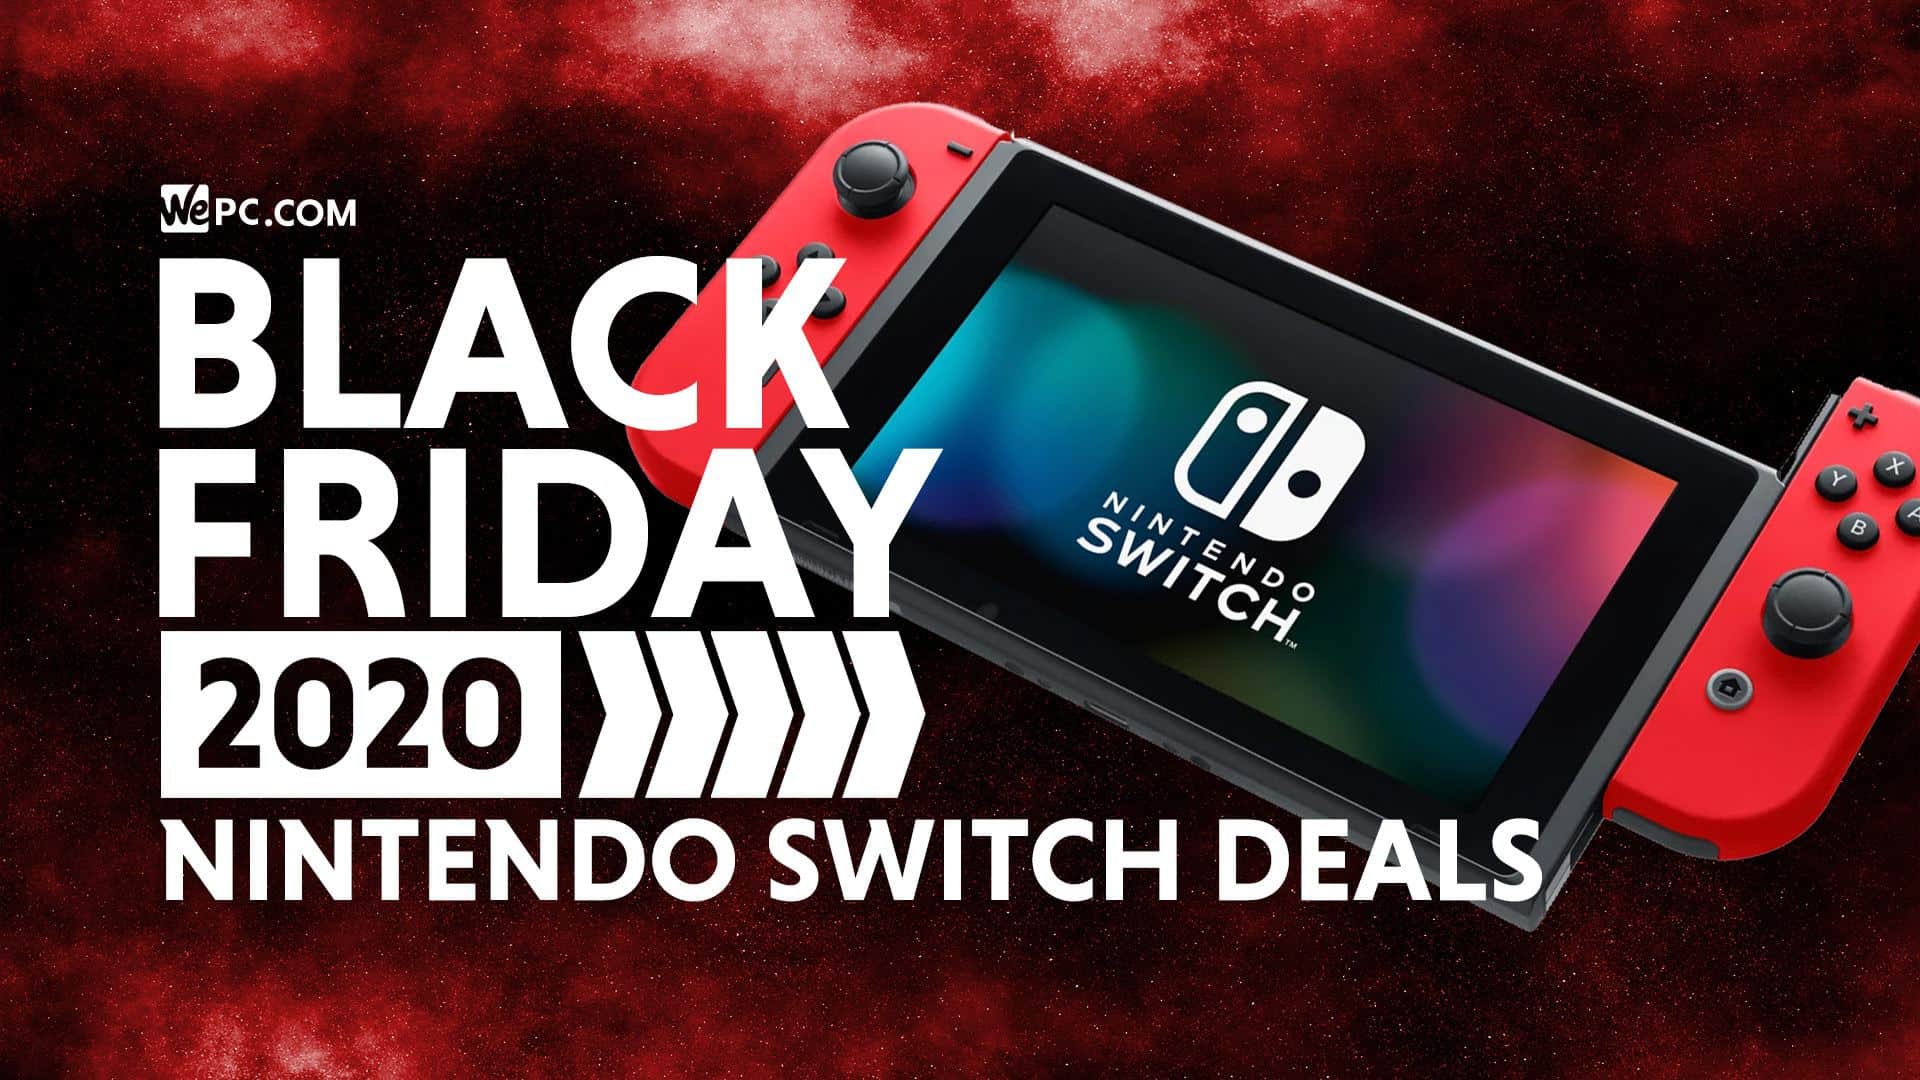 Nintendo Switch Black Friday Deals 2020 Wepc Deals